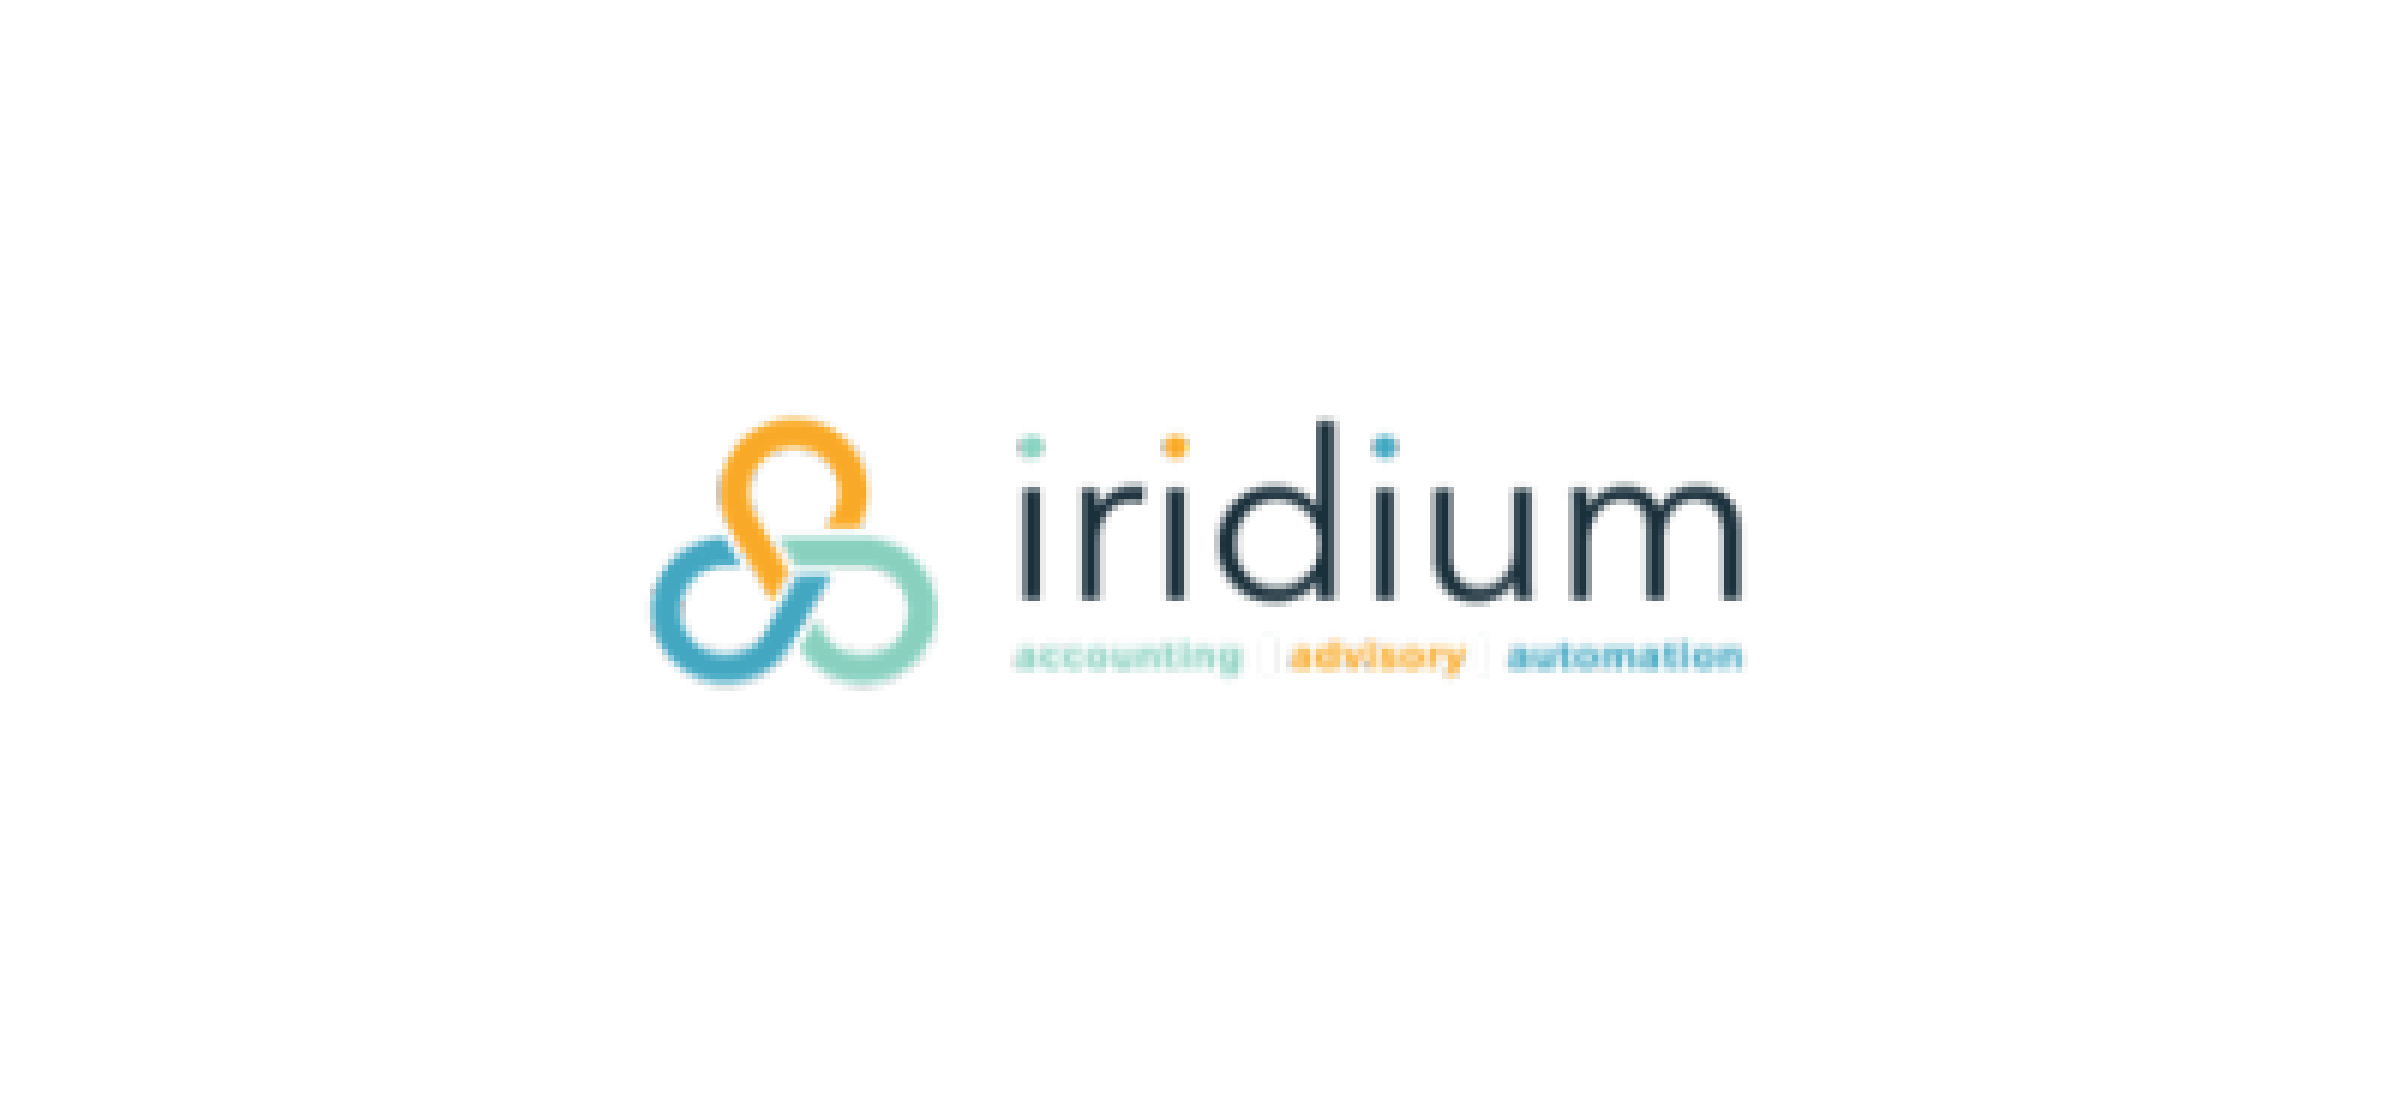 The Iridium logo